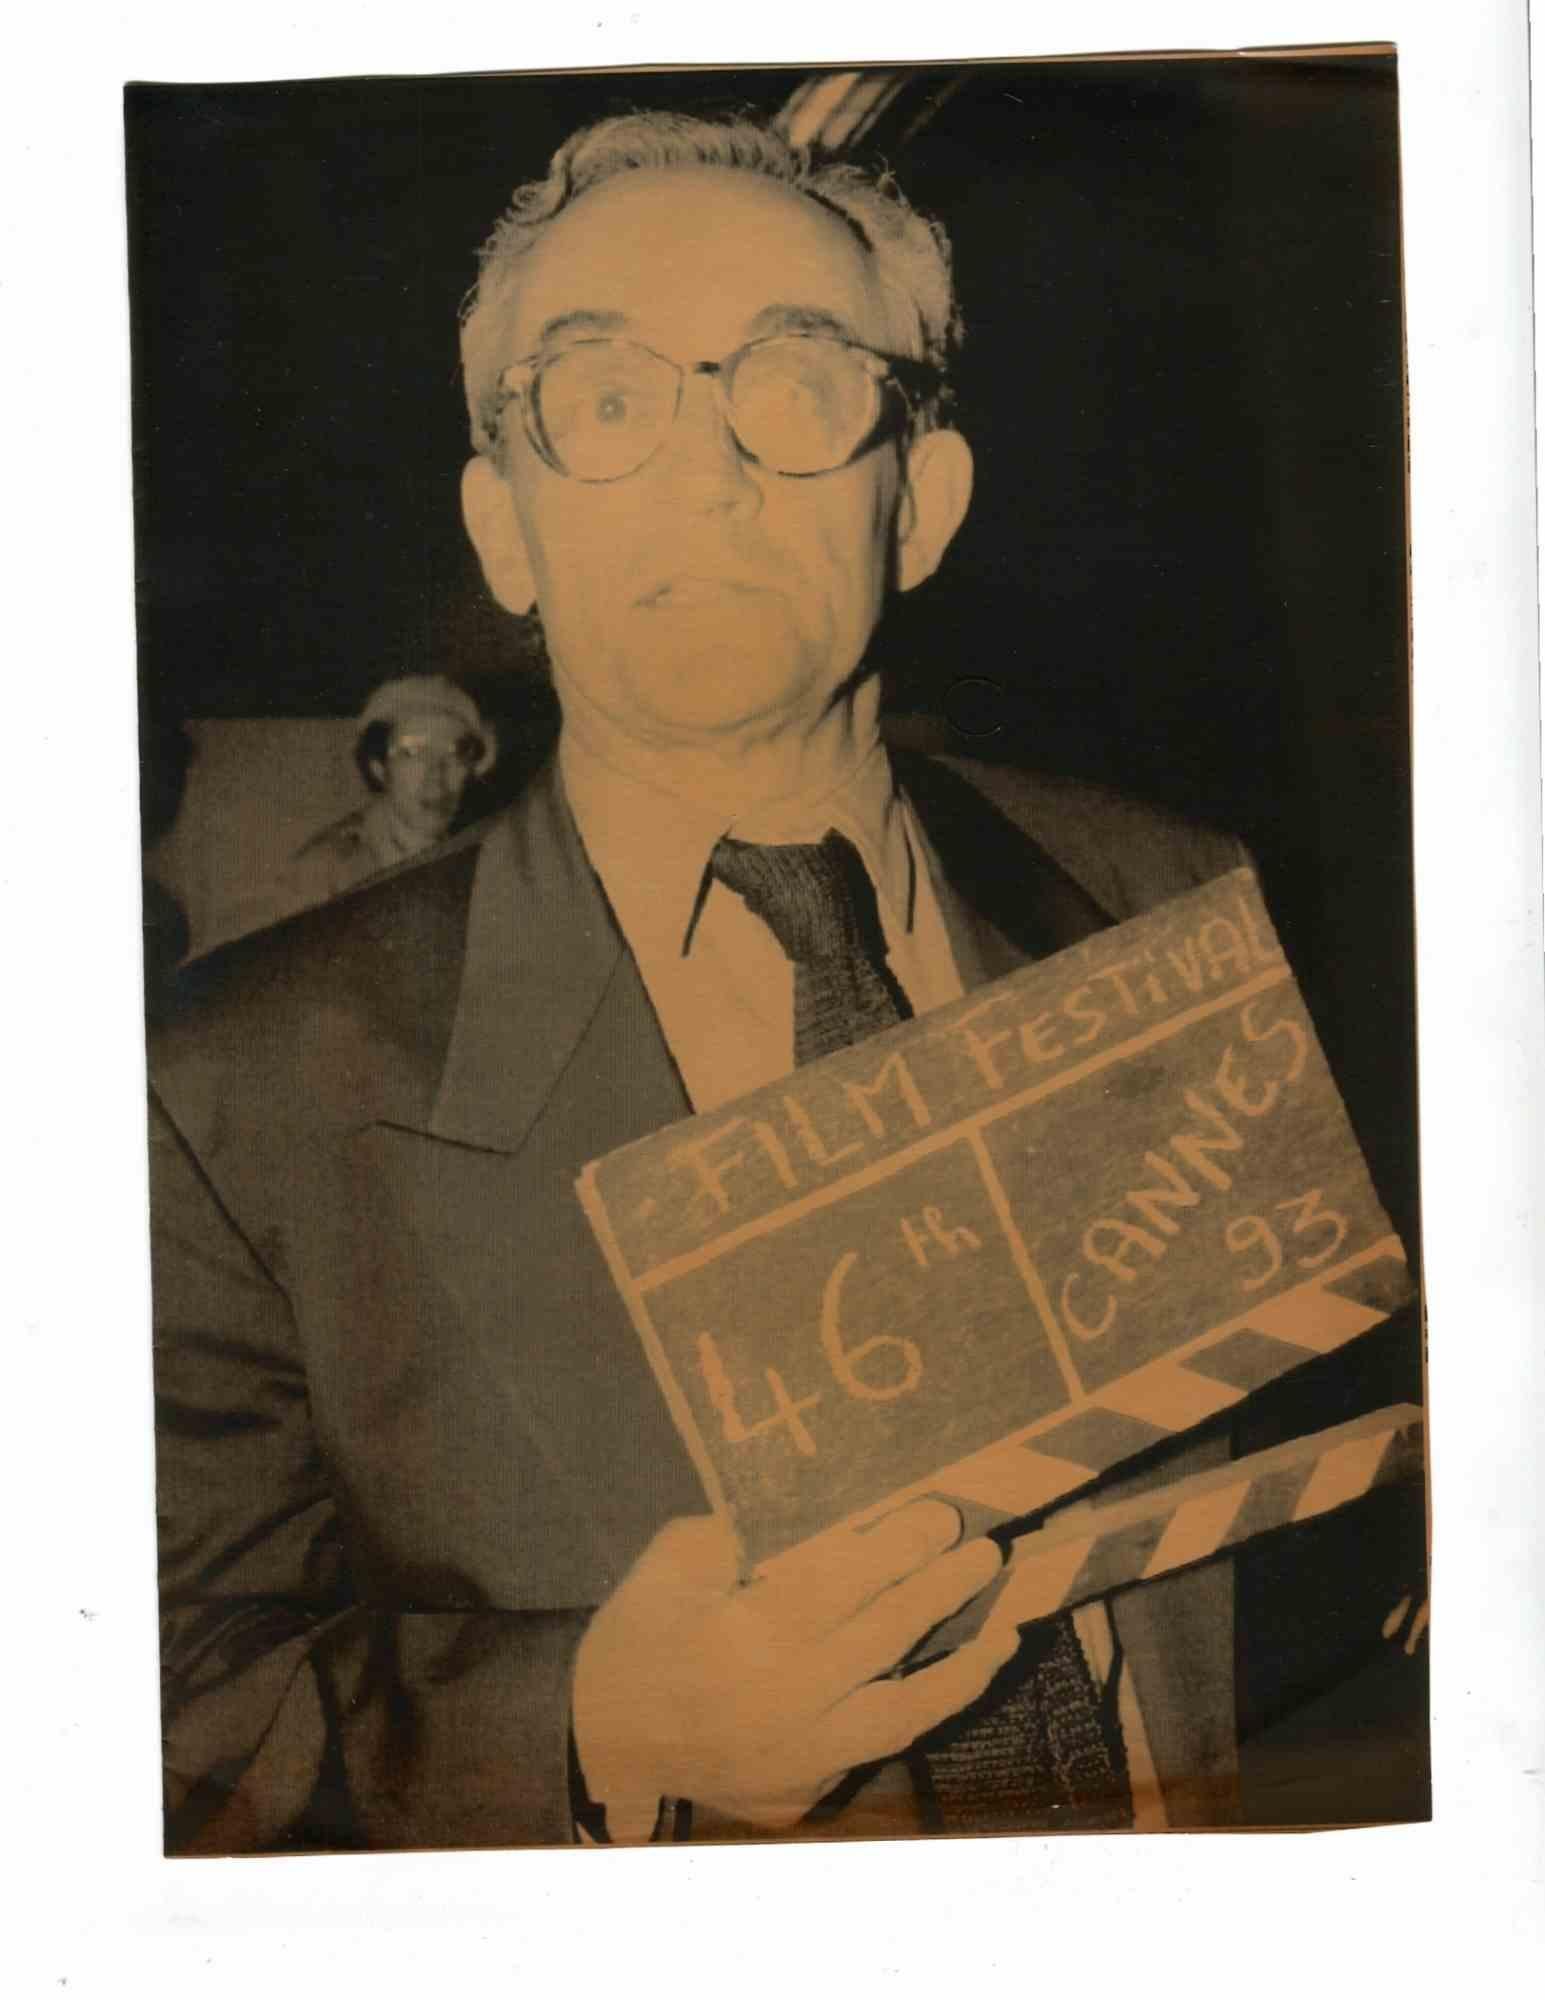 Unknown Figurative Photograph - Louis Malle at 46* Cannes Film Festival - Vintage Photo - 1993